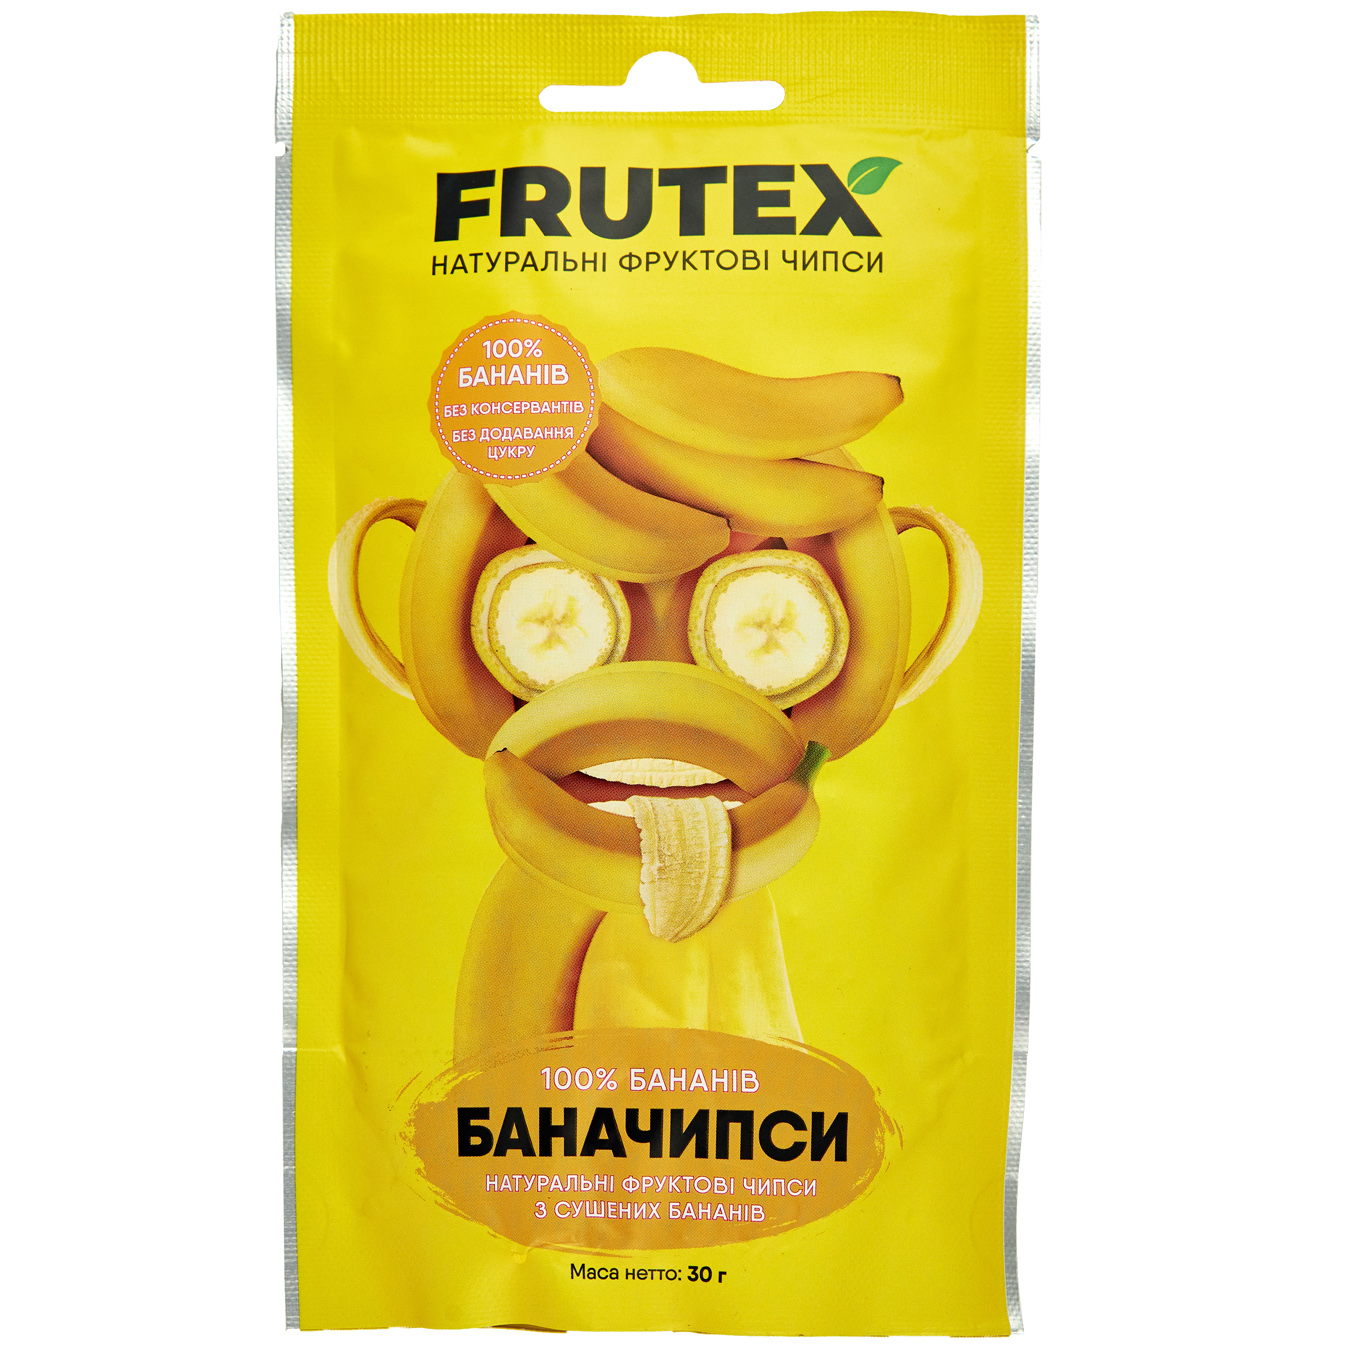 Fruit chips Frutex banachips 30g